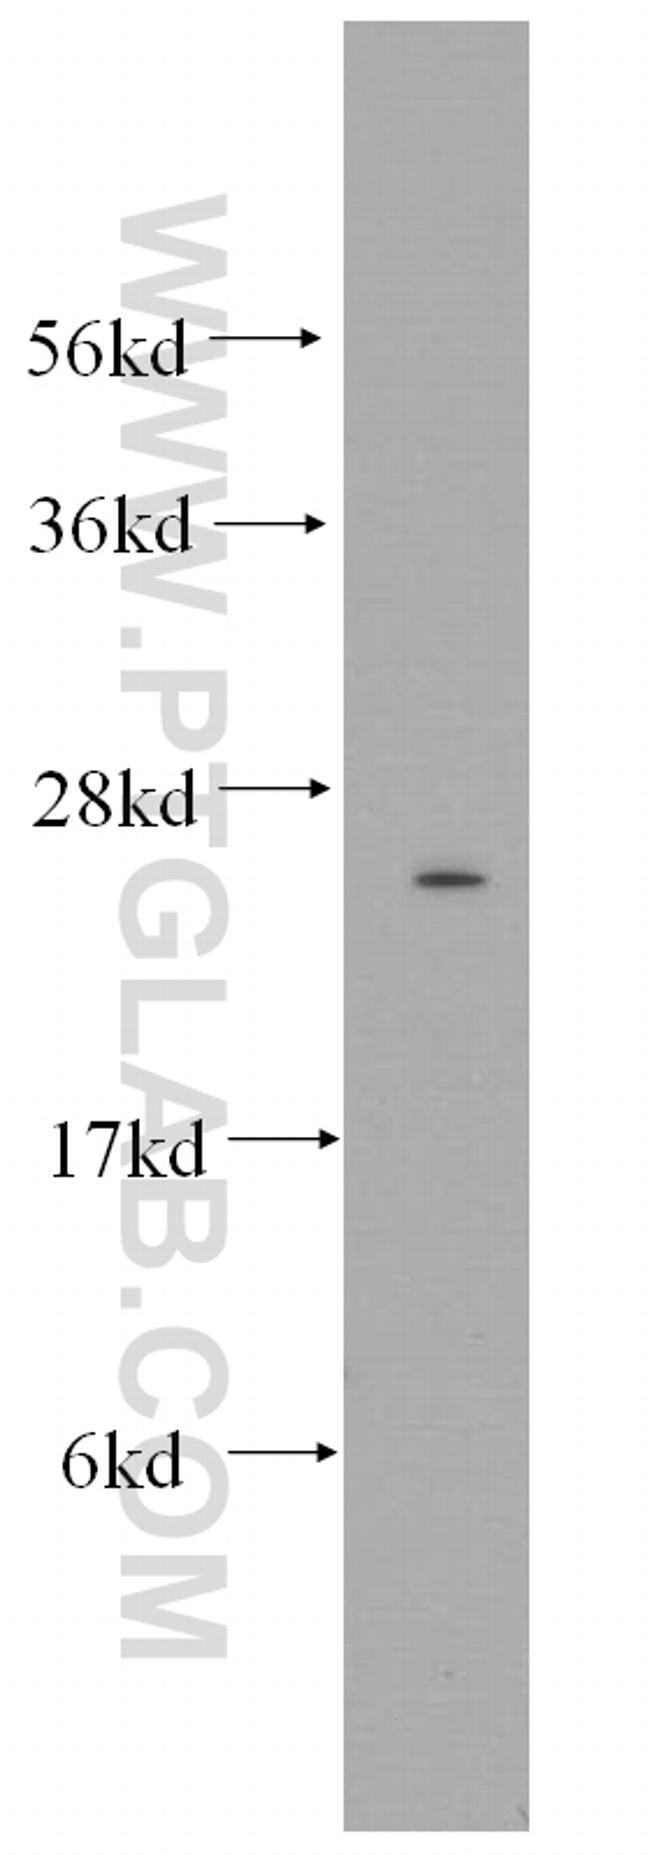 Connexin-26 Antibody in Western Blot (WB)